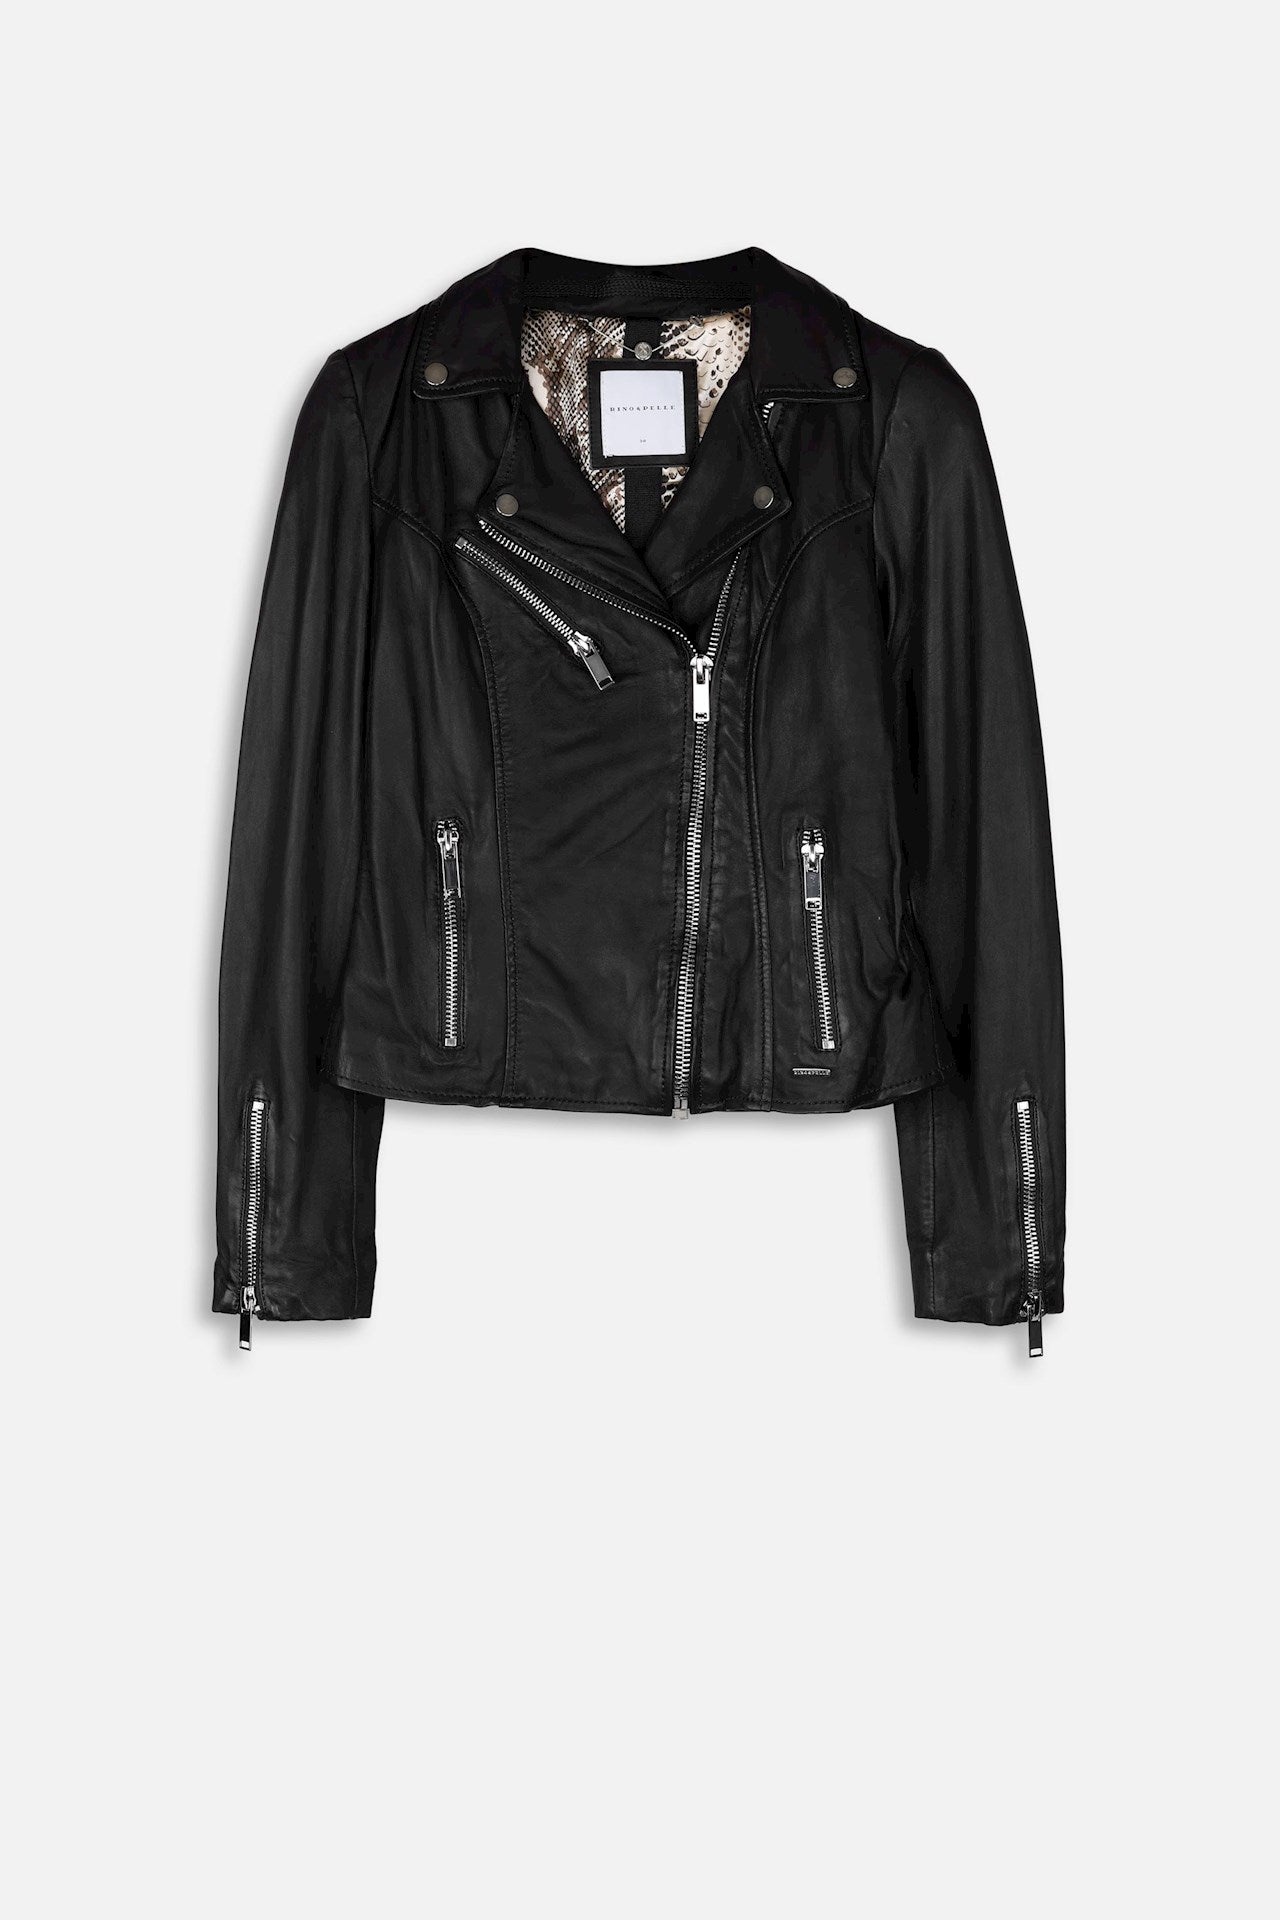 RP - Black Lambs Leather Biker Jacket